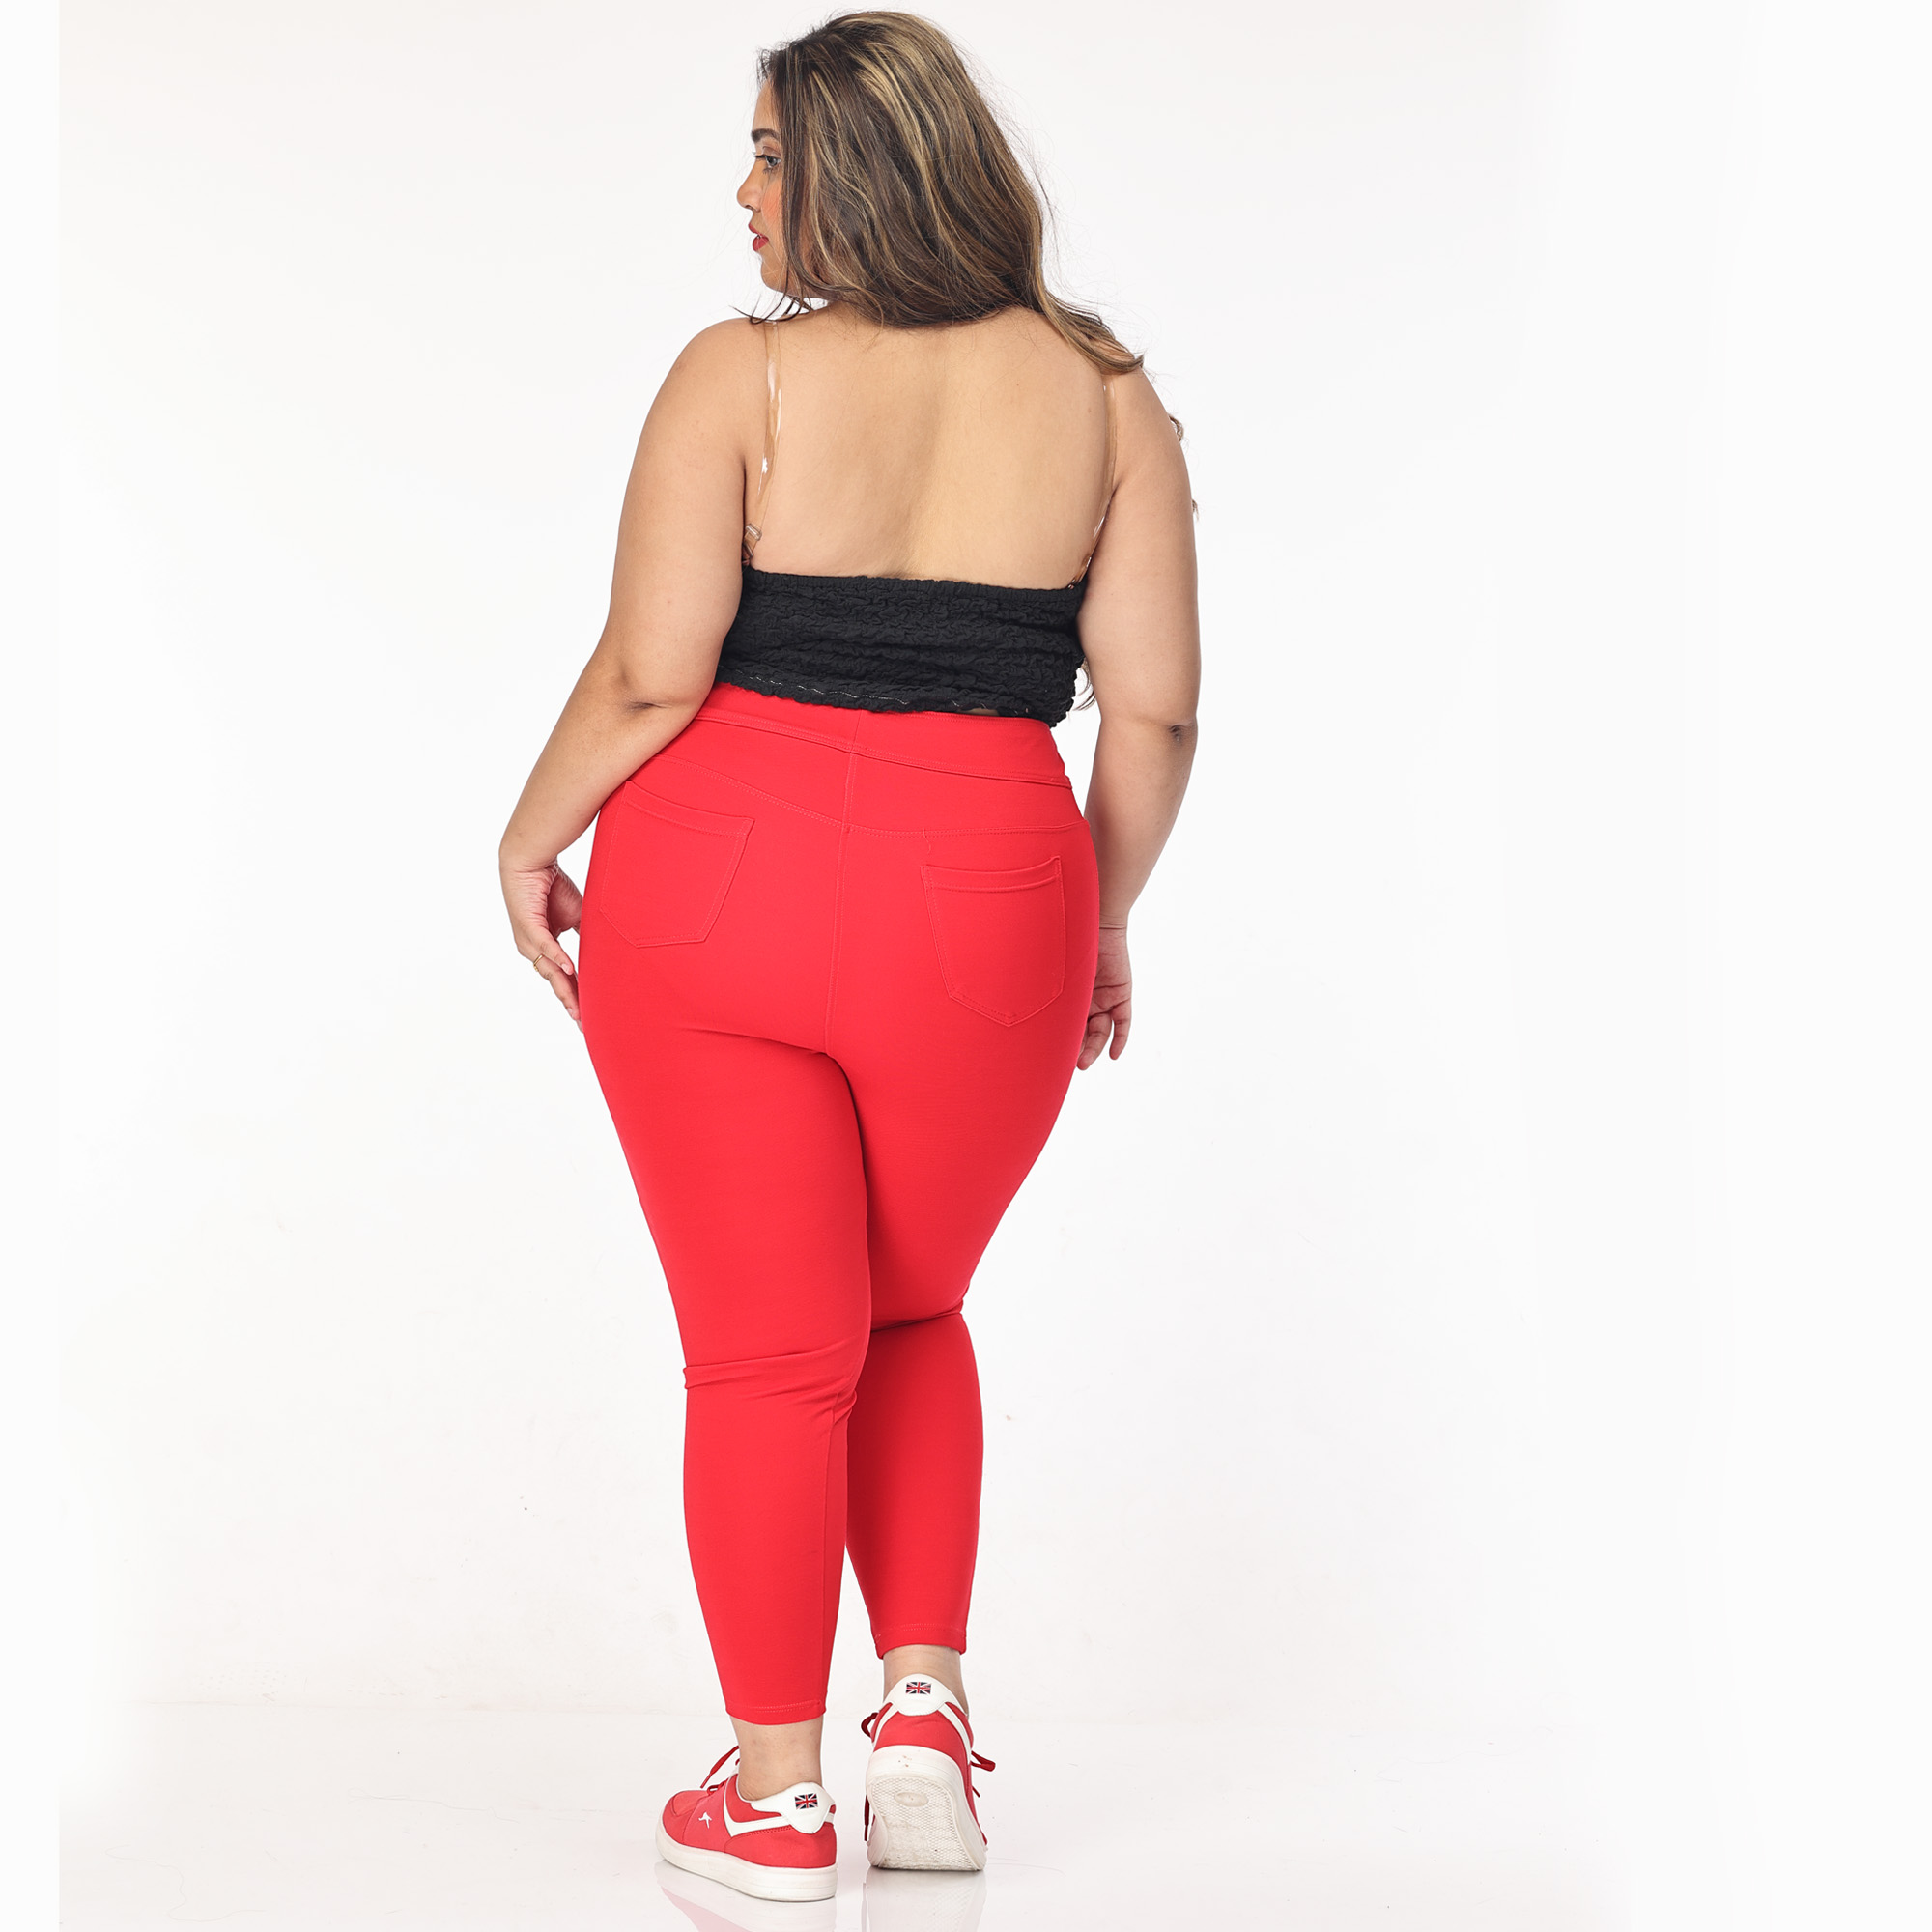 Red jeggings women Plus size compression pant 2 back pockets - Belore Slims